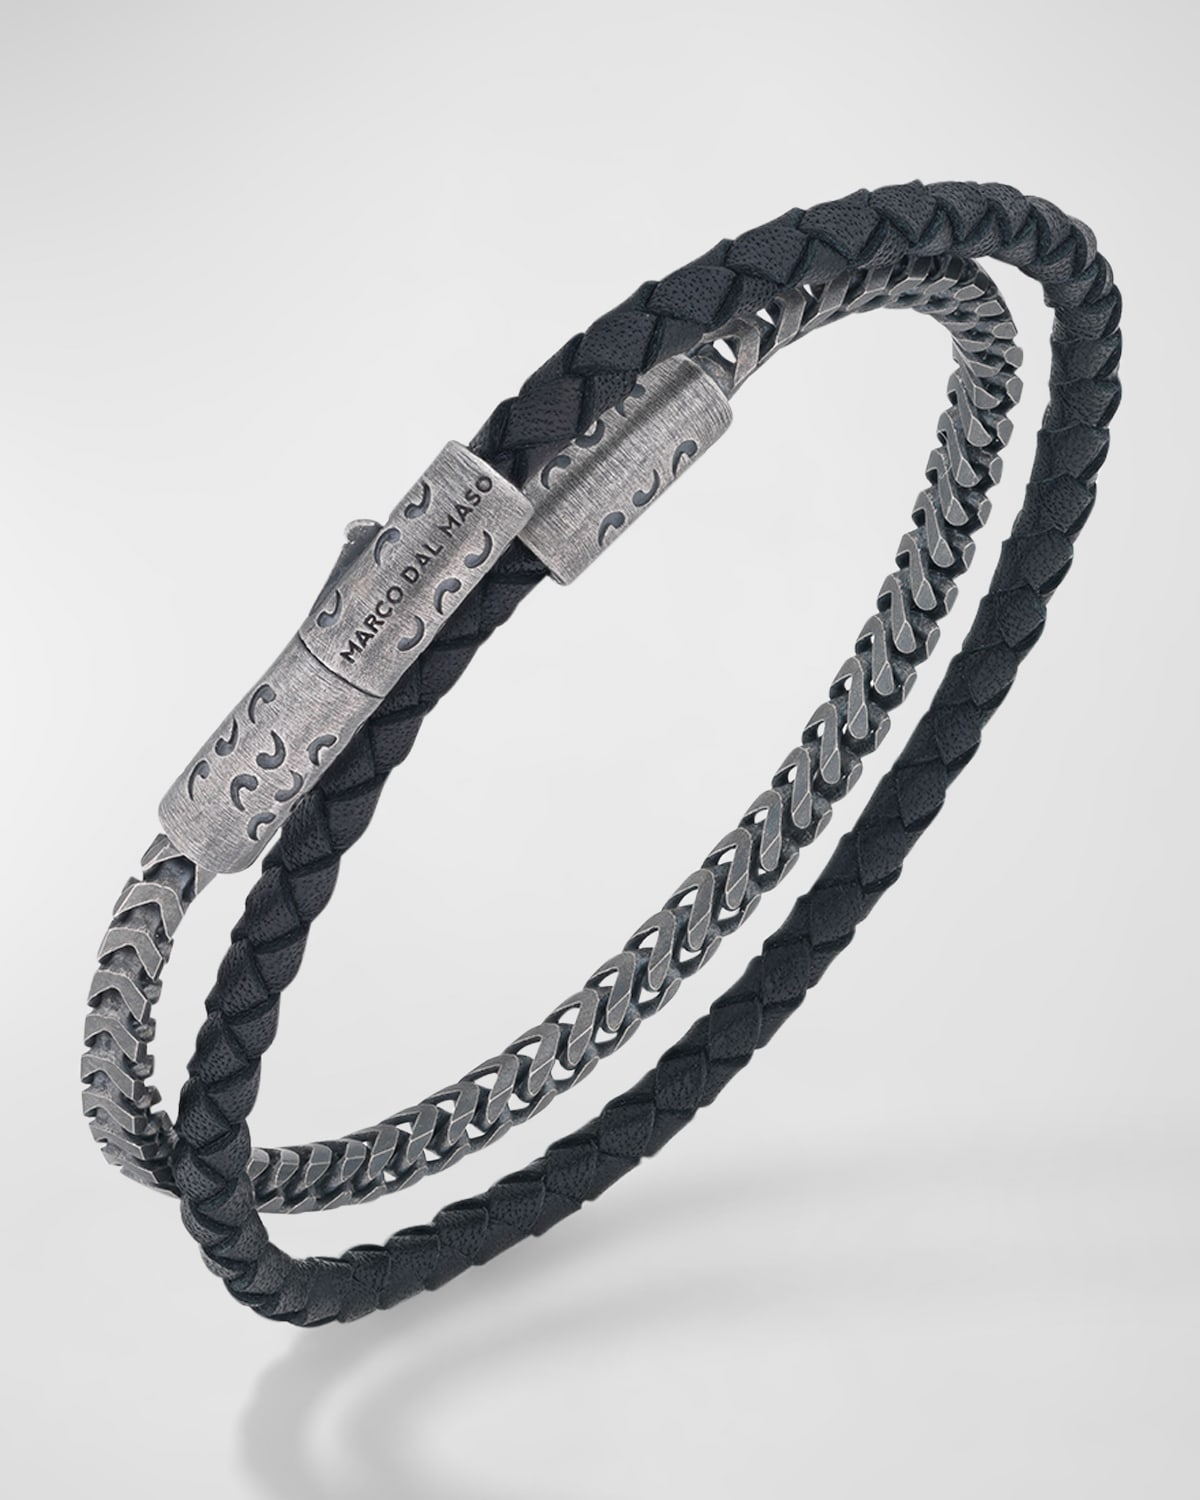 Men's Lash Double Wrap Leather Franco Chain Combo Bracelet with Trigger Clasp